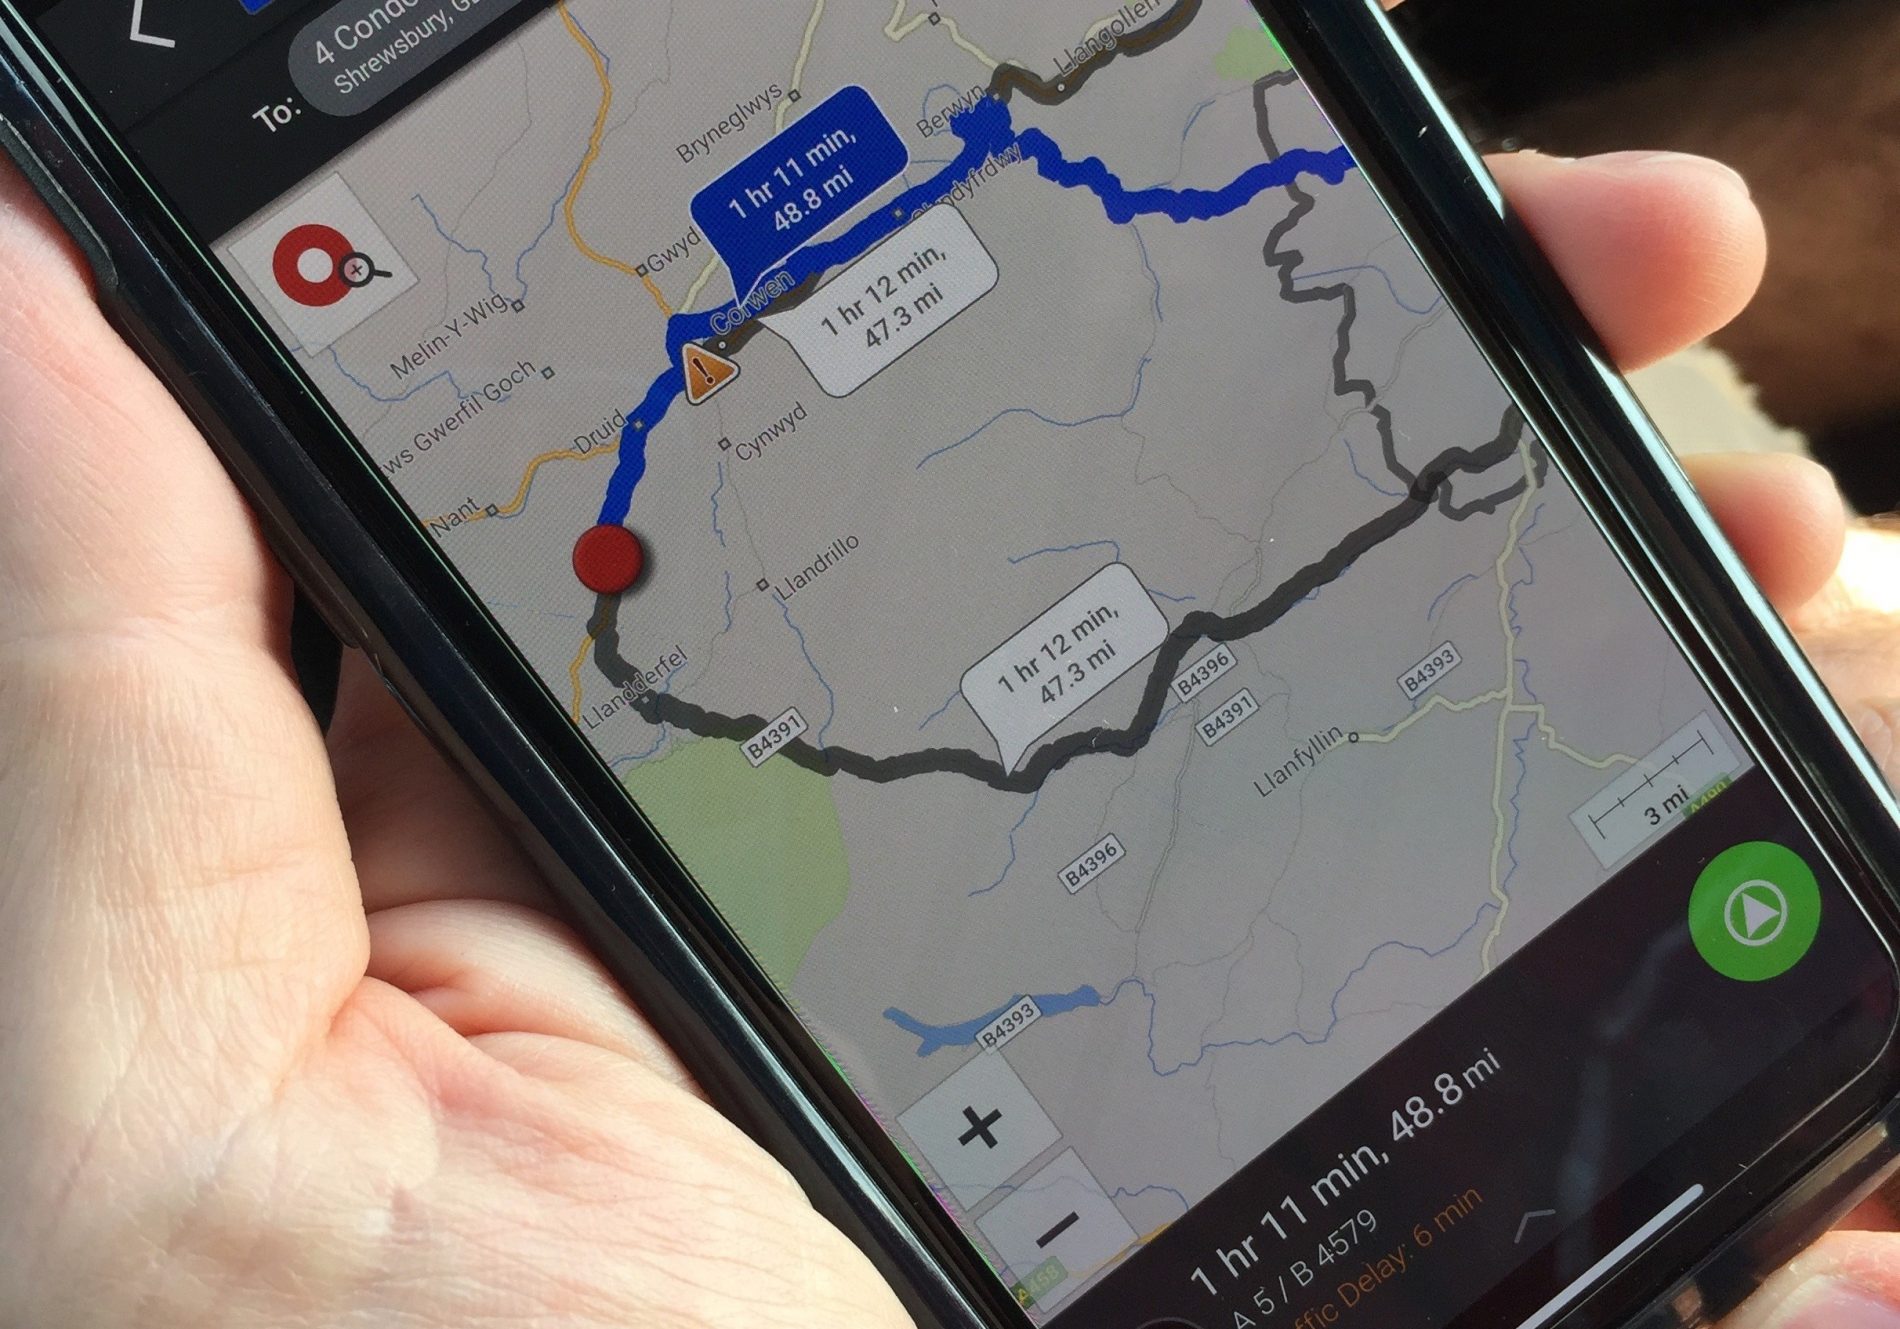 Using the CoPilot GPS App